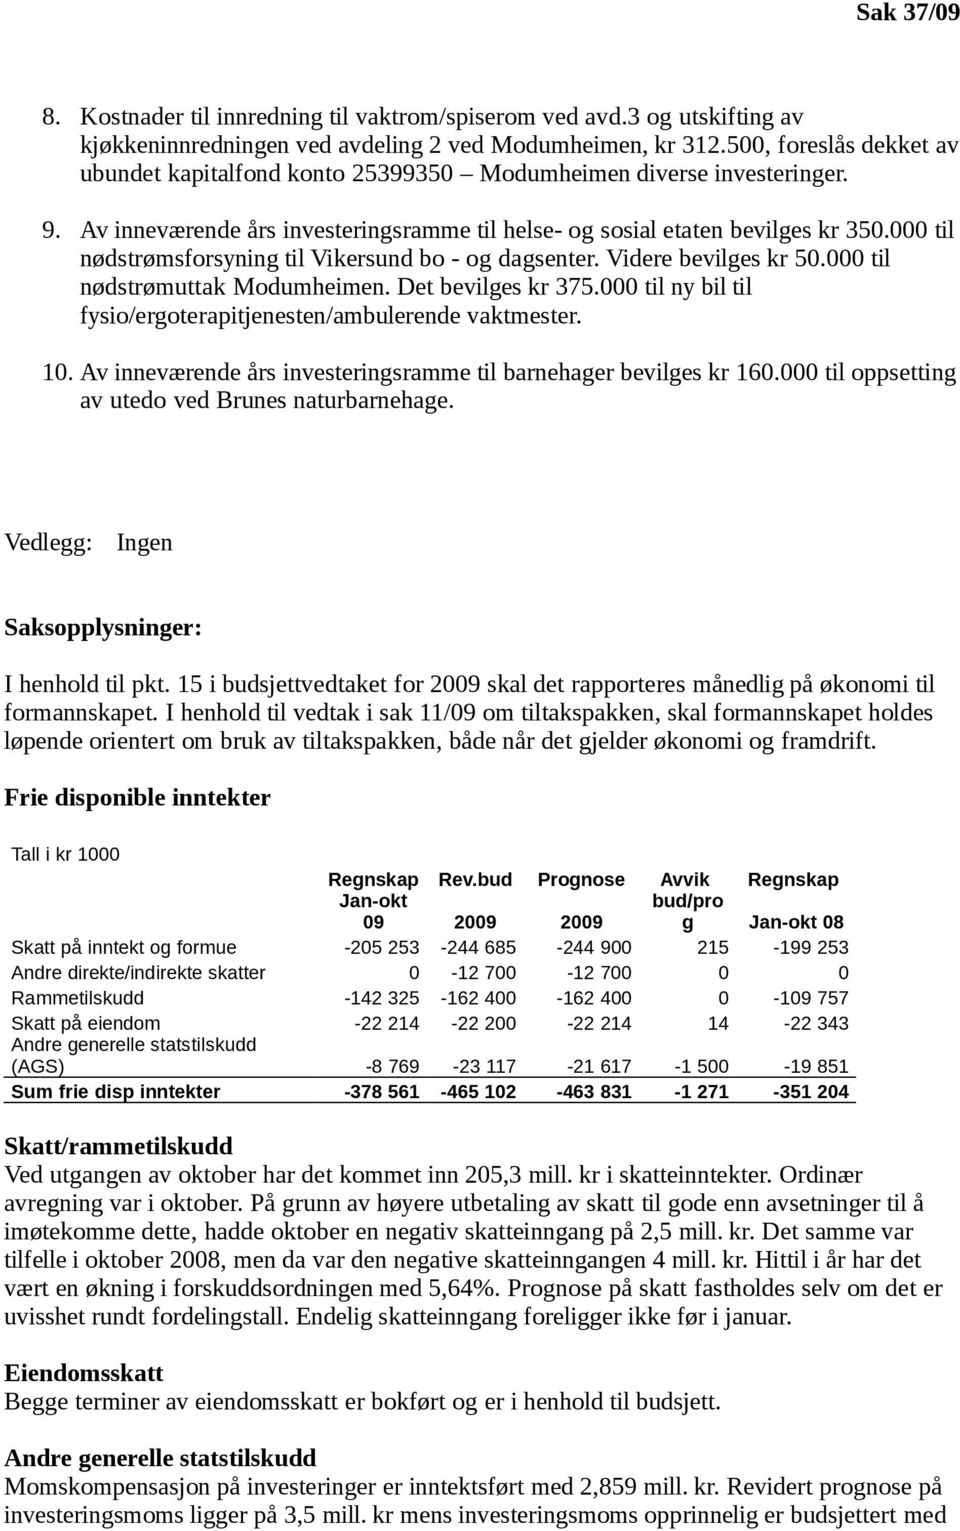 000 til nødstrømsforsyning til Vikersund bo - og dagsenter. Videre bevilges kr 50.000 til nødstrømuttak Modumheimen. Det bevilges kr 375.